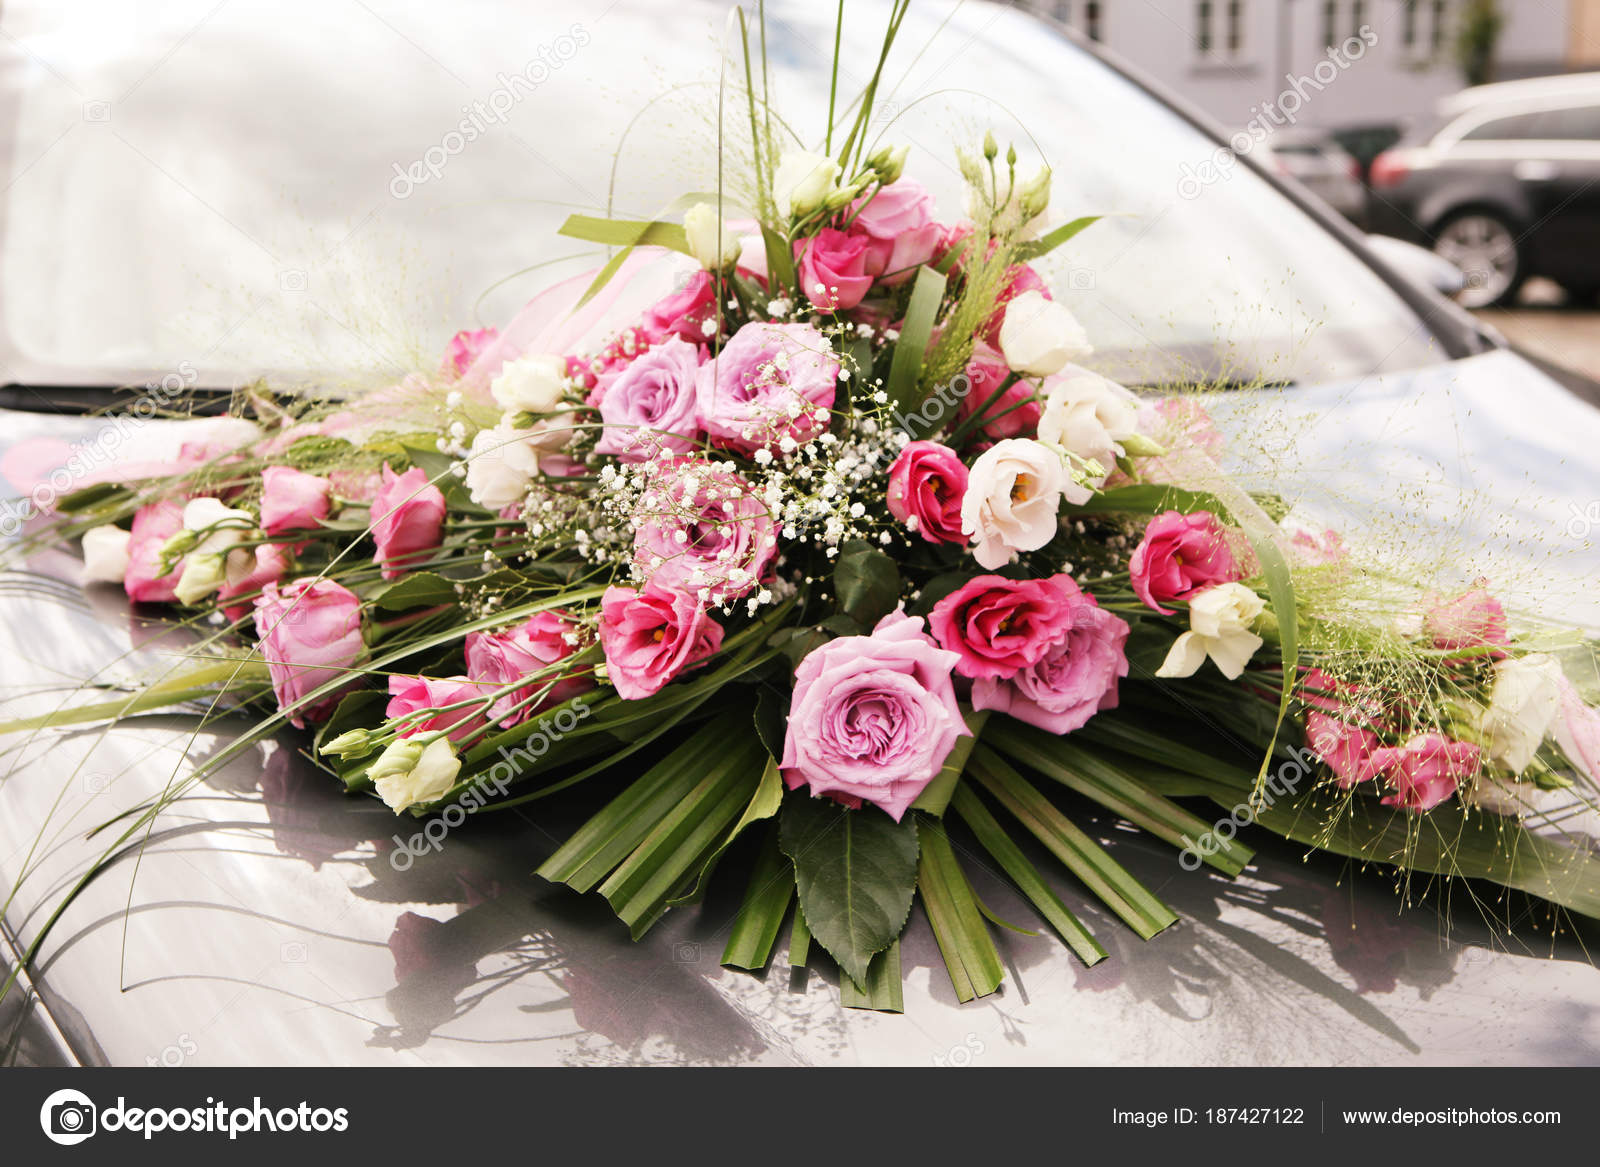 https://st3.depositphotos.com/2632879/18742/i/1600/depositphotos_187427122-stock-photo-flower-decoration-wedding-car.jpg